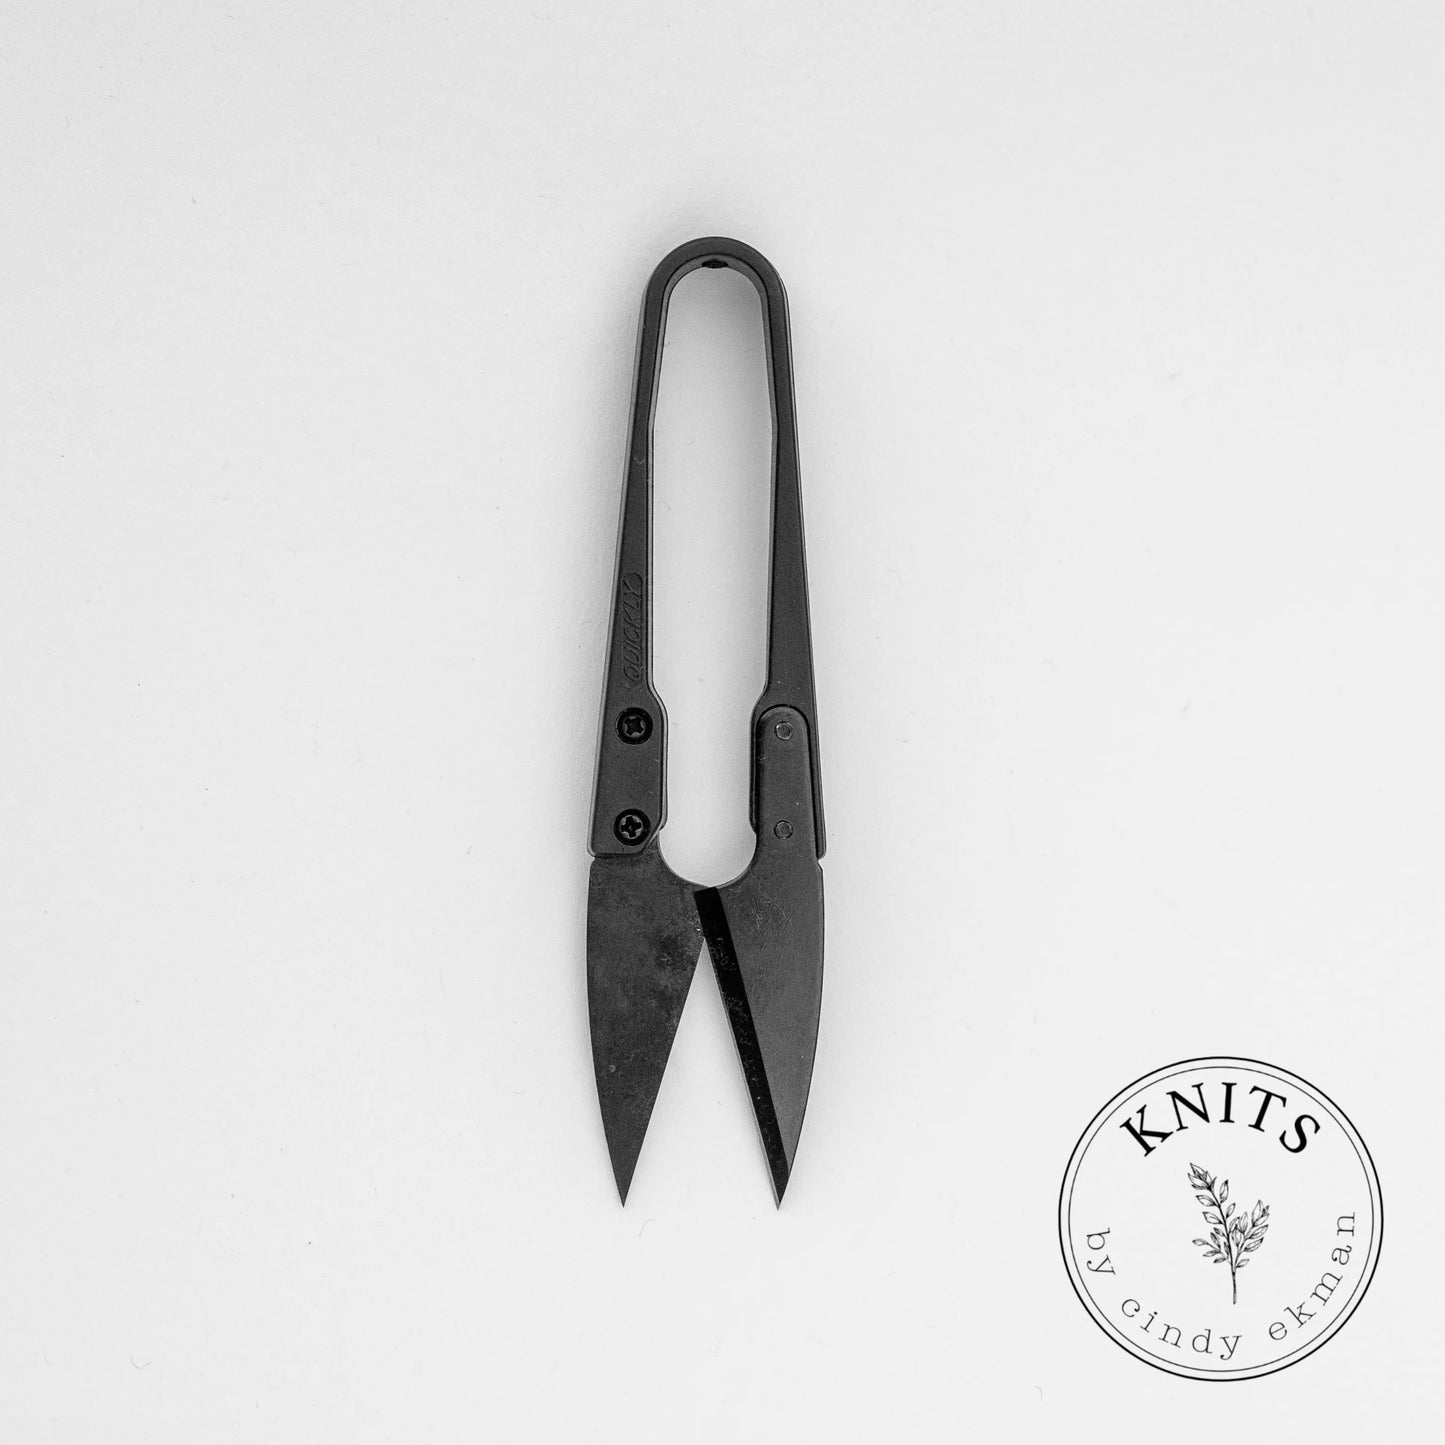 Sheperds scissor KNITS by cindy ekman